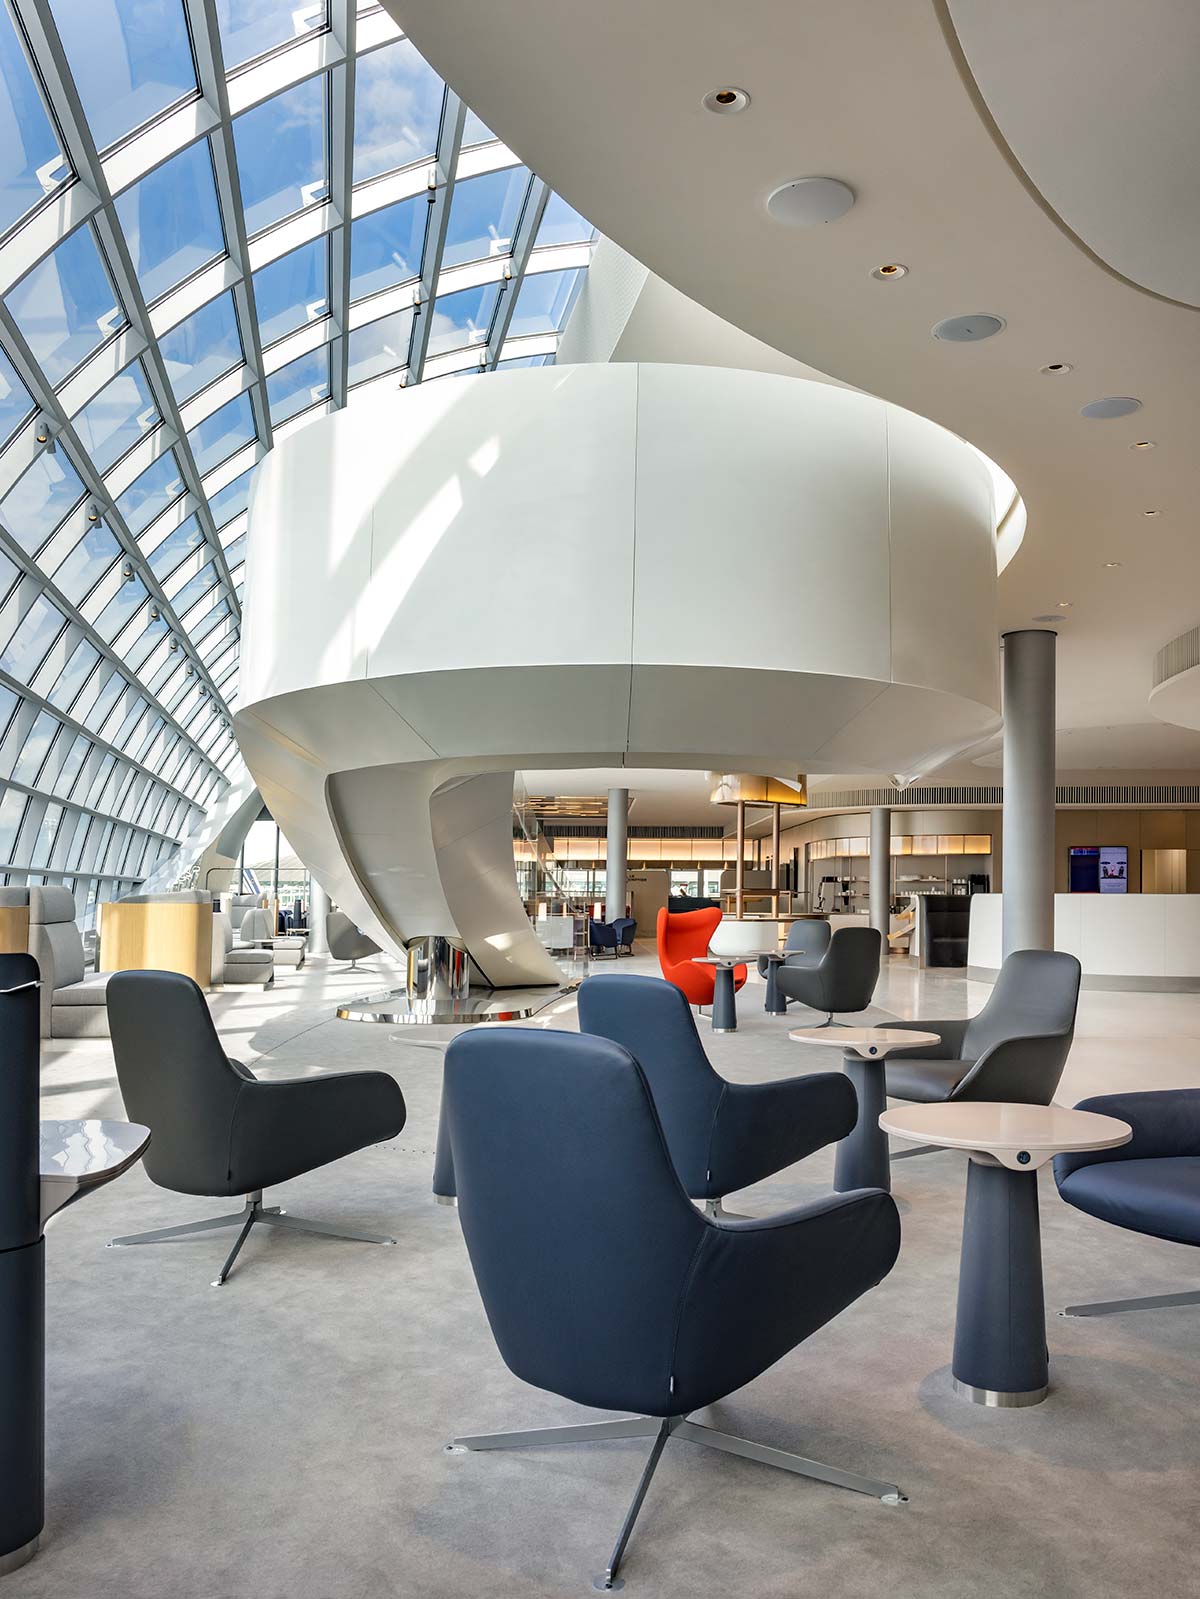 Air France Lounge, Paris-Charles de Gaulle Airport